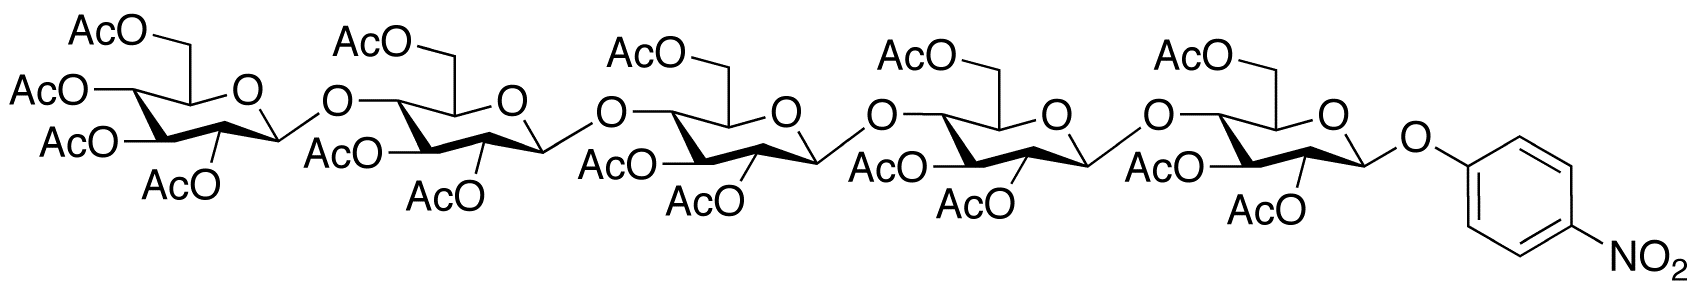 p-Nitrophenyl β-D-Cellopentaoside Hexadecaacetate